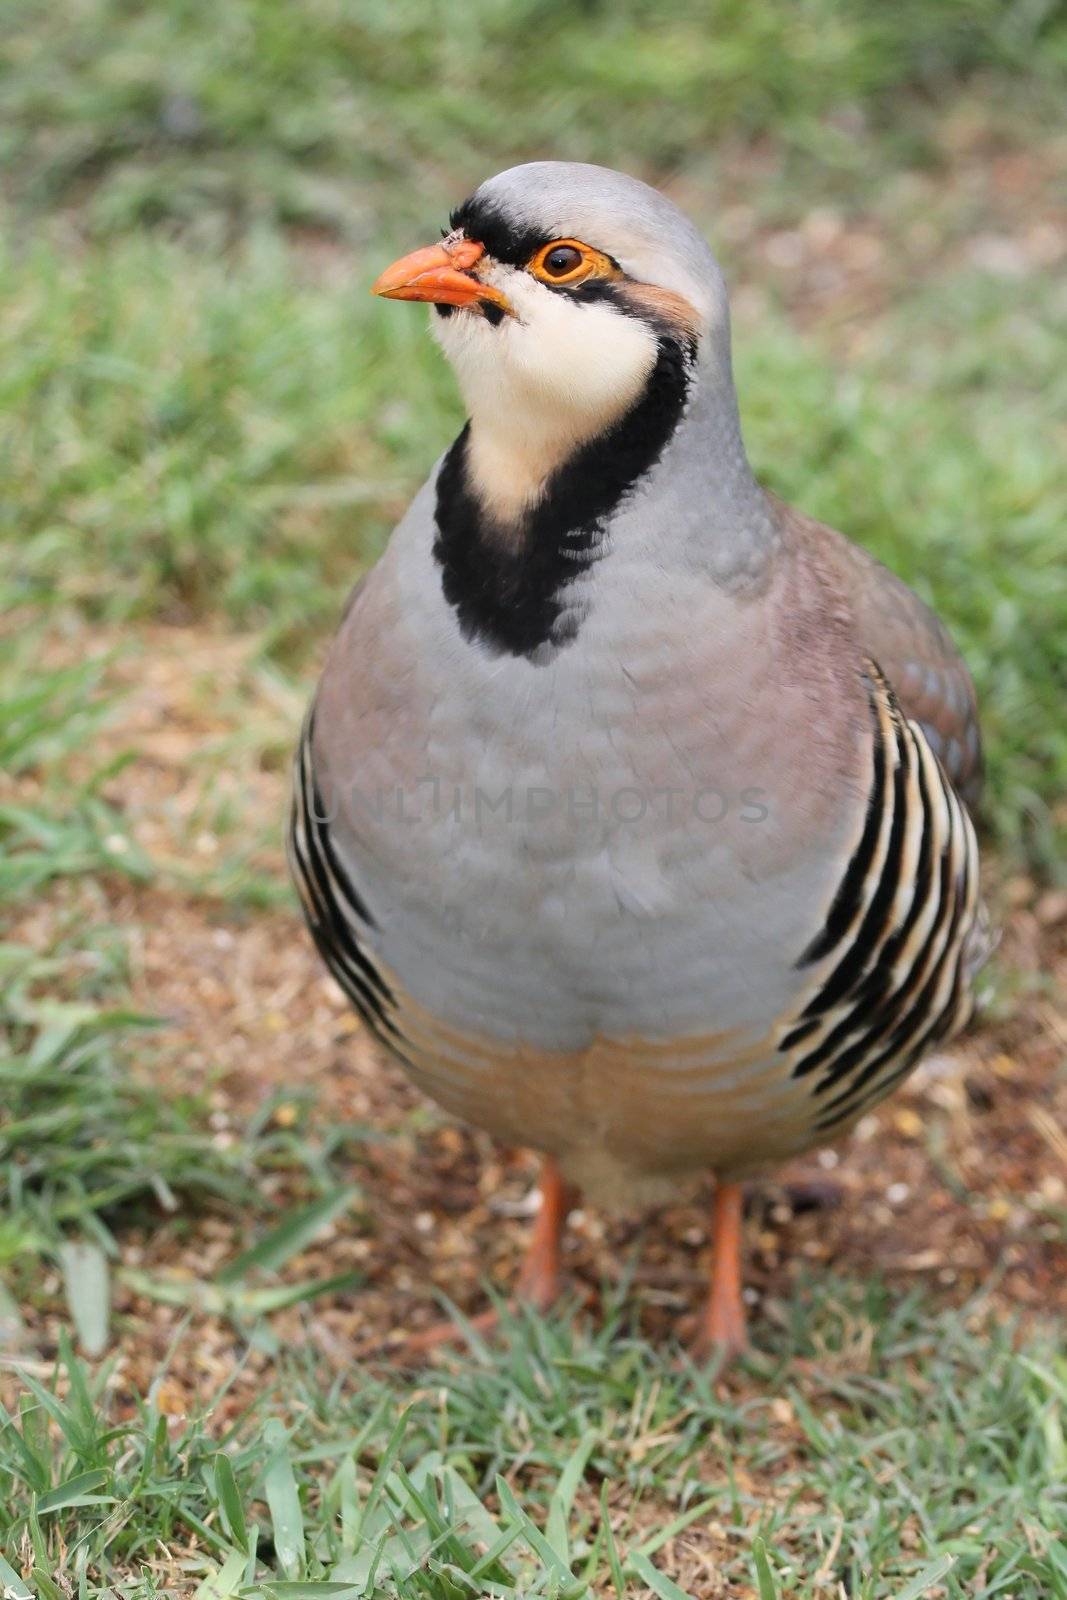 Partridge bird with white face and orange beak standing on green grass